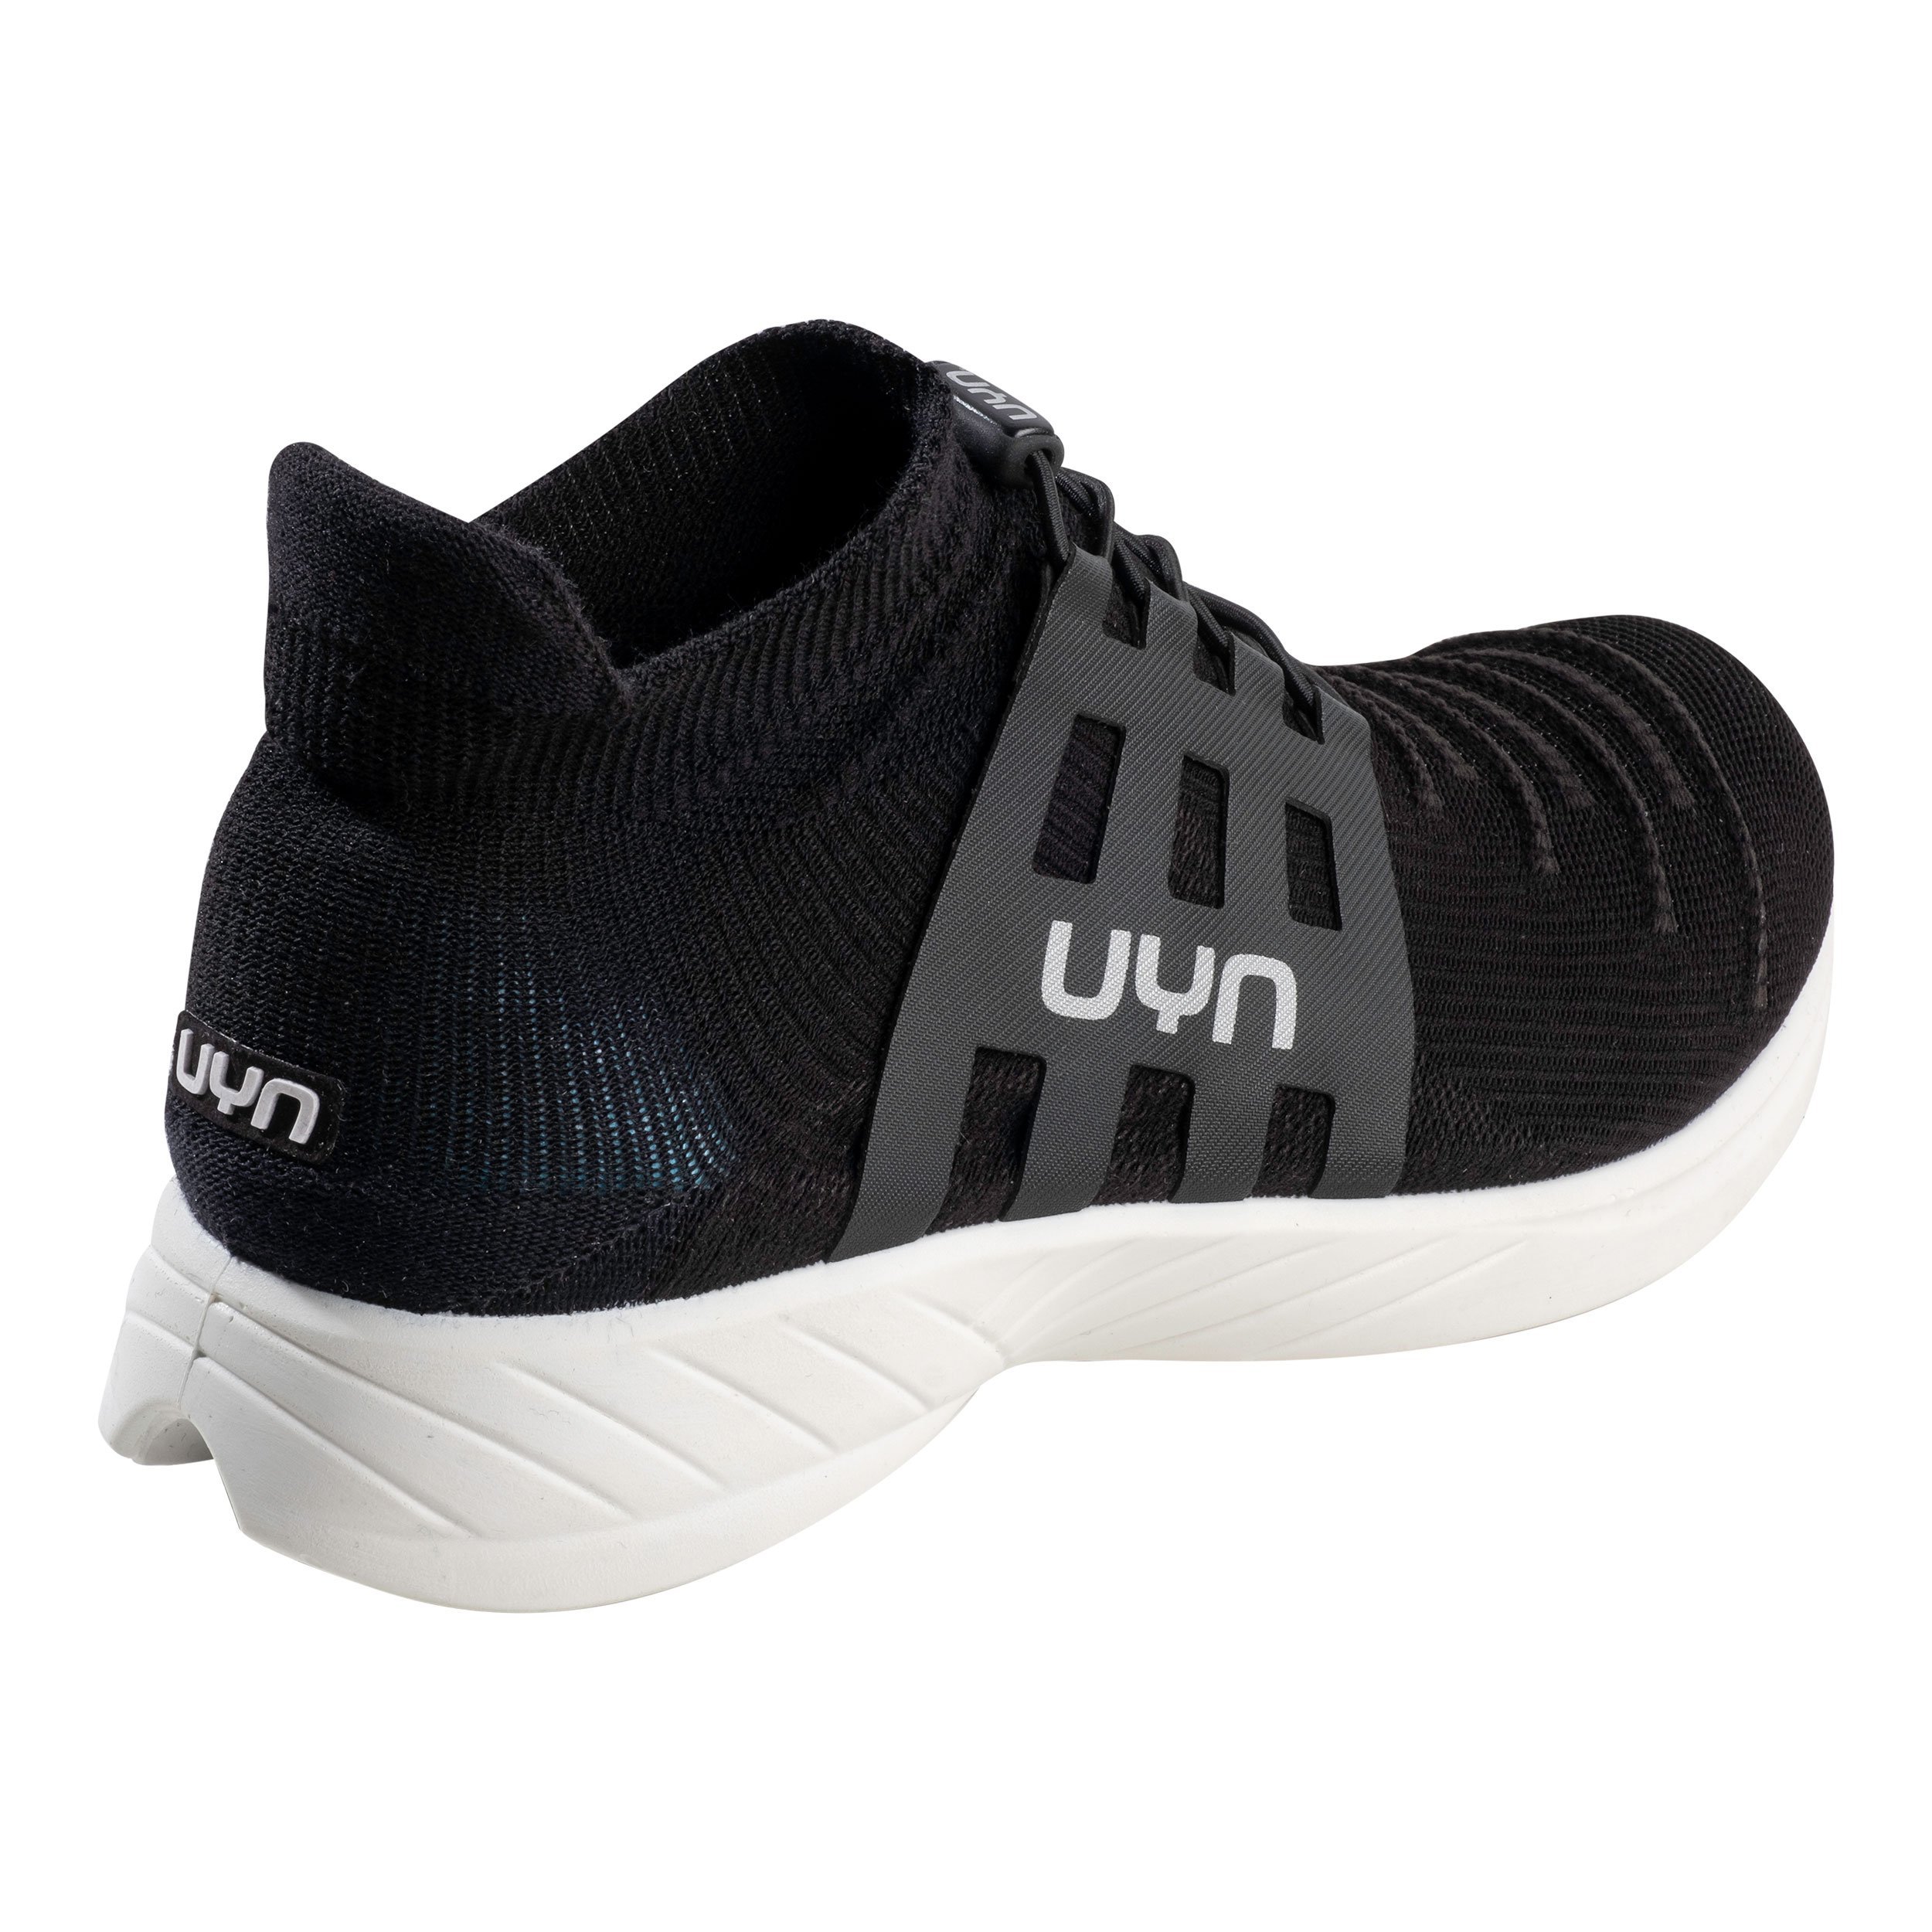 Topánky UYN x-cross tune - čierna/biela